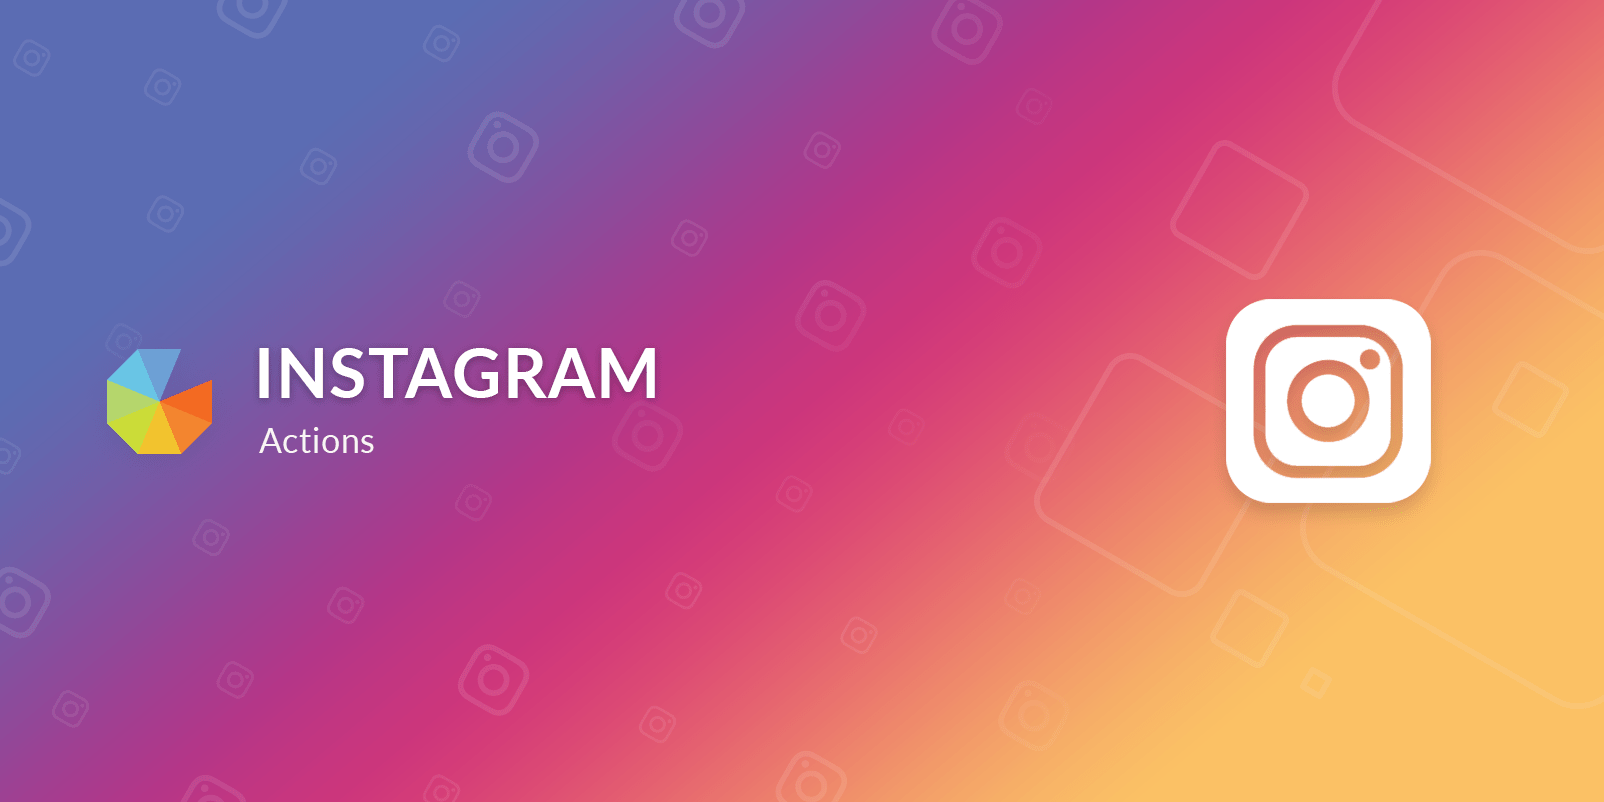 Instagram Actions for Gleam.io